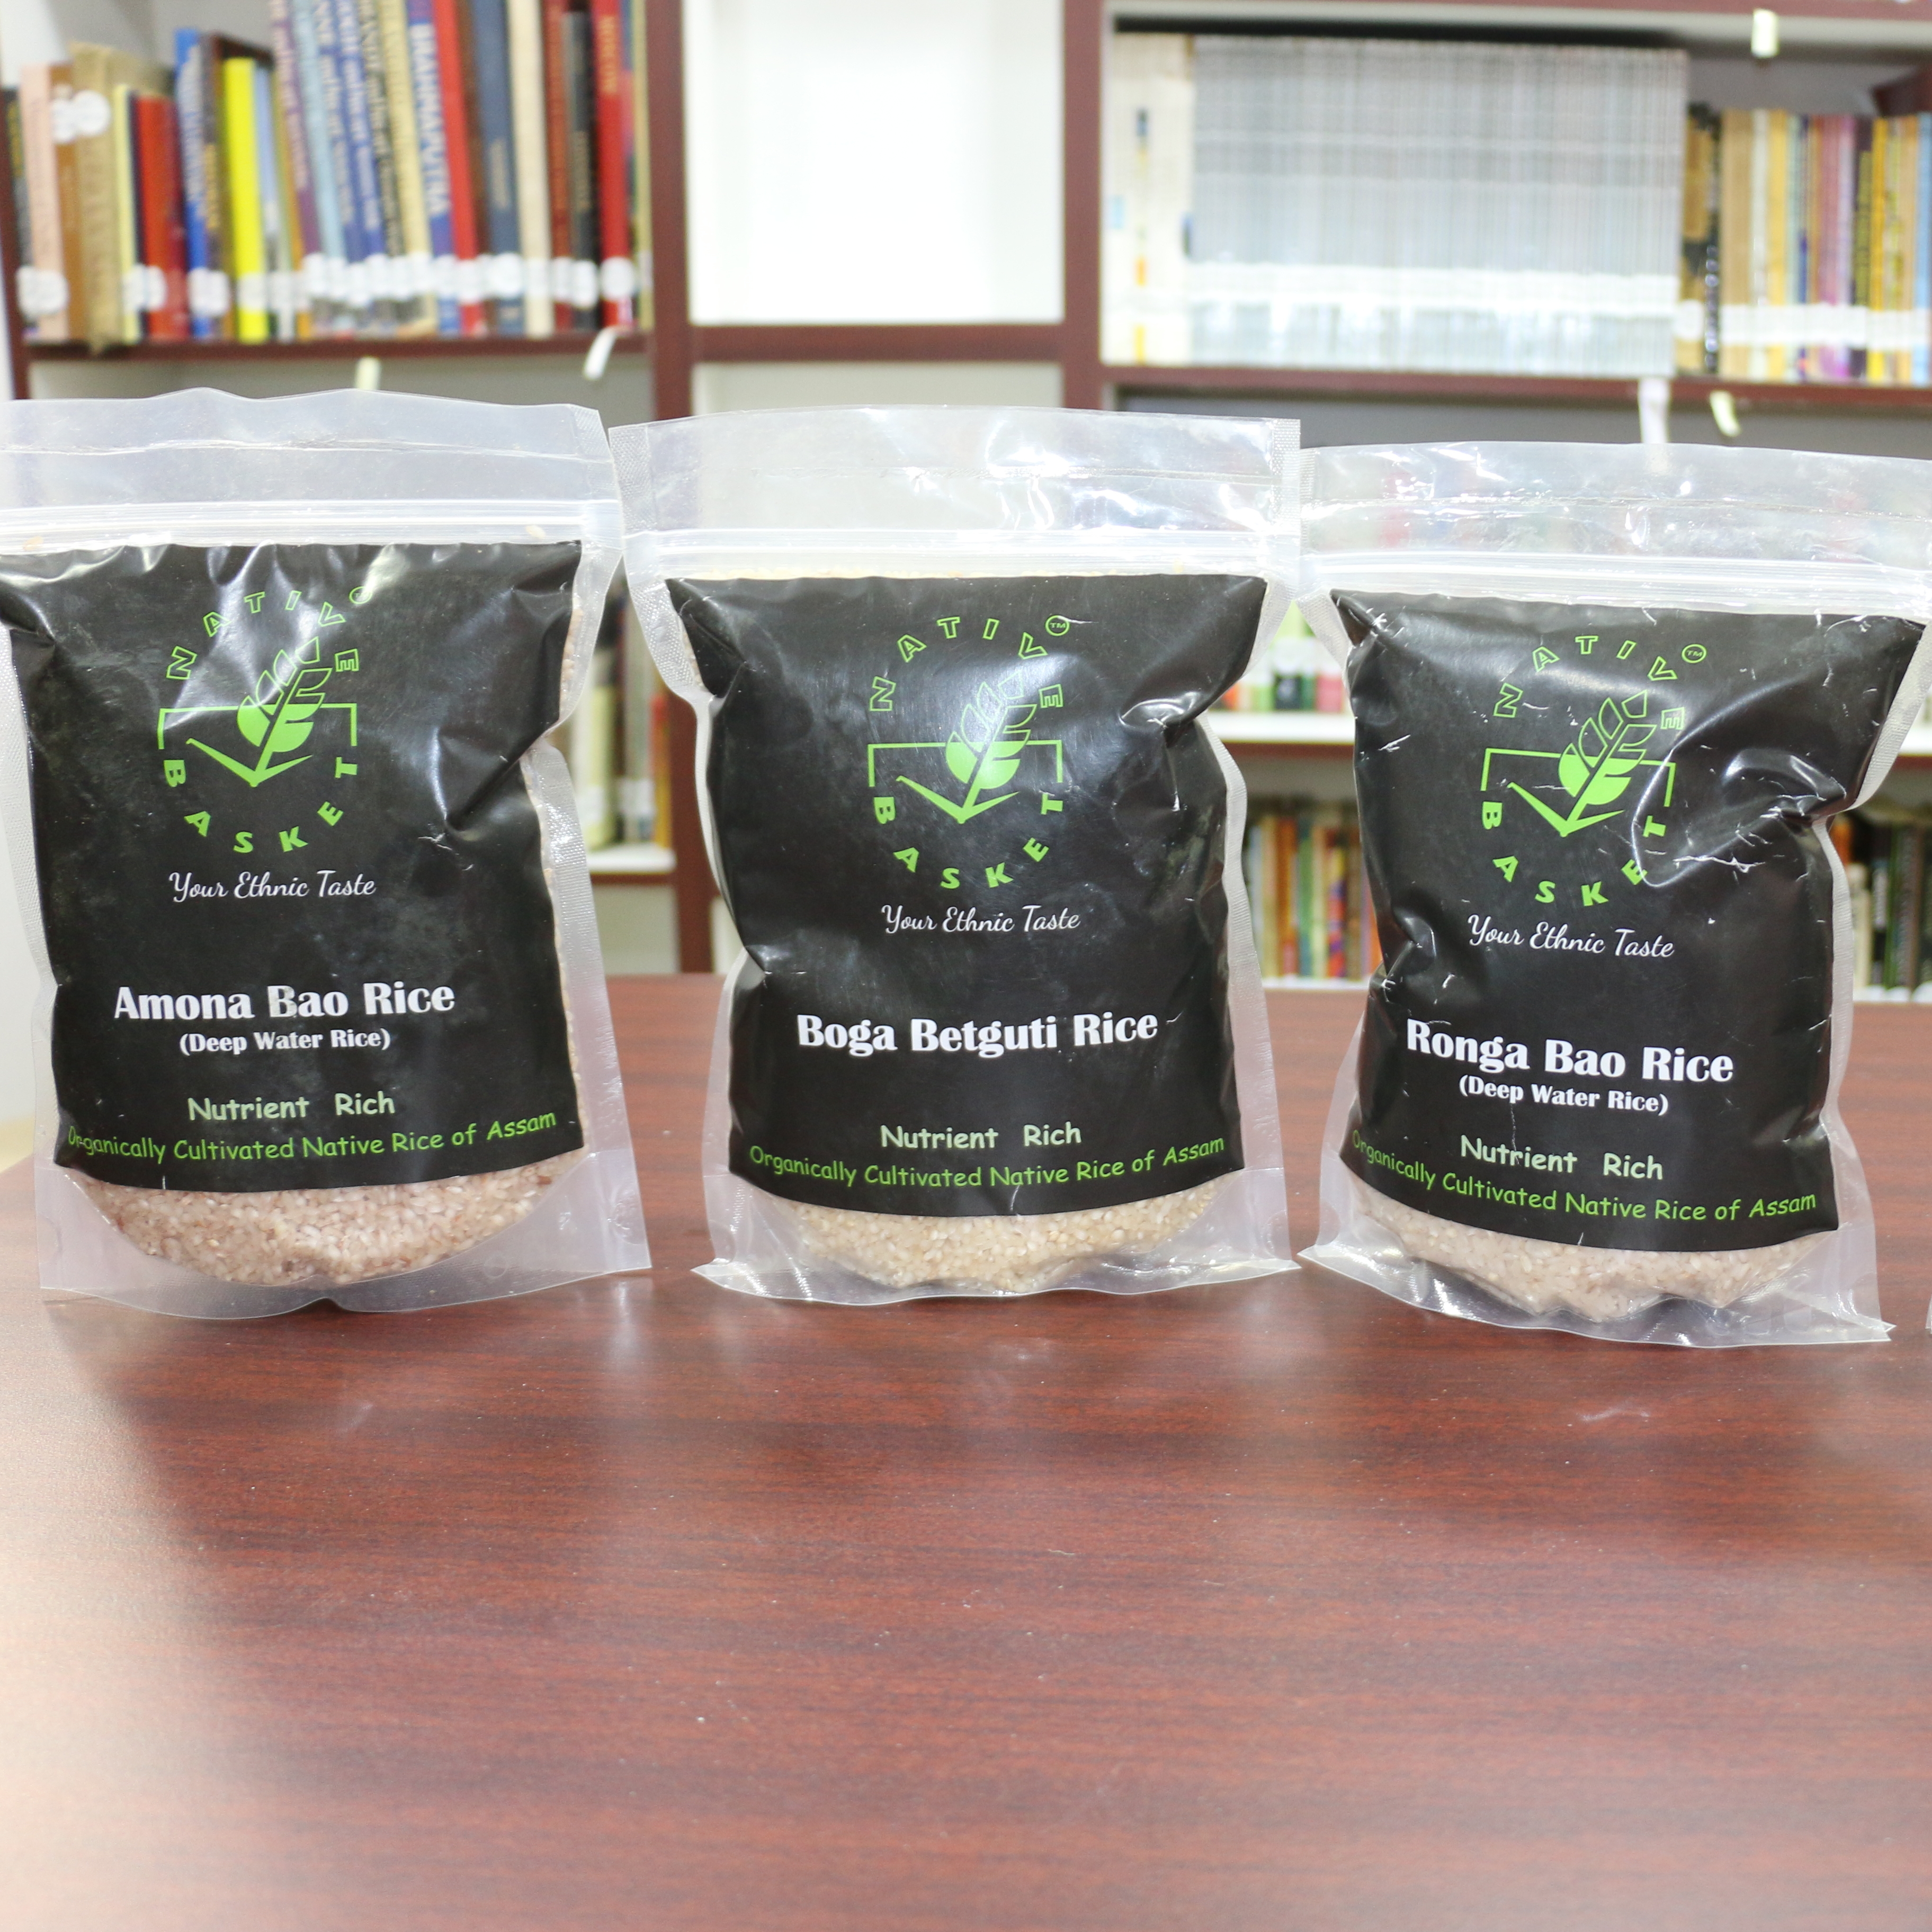 Rice varieties launched under Native Basket brand. Credit: Sonal Dsouza